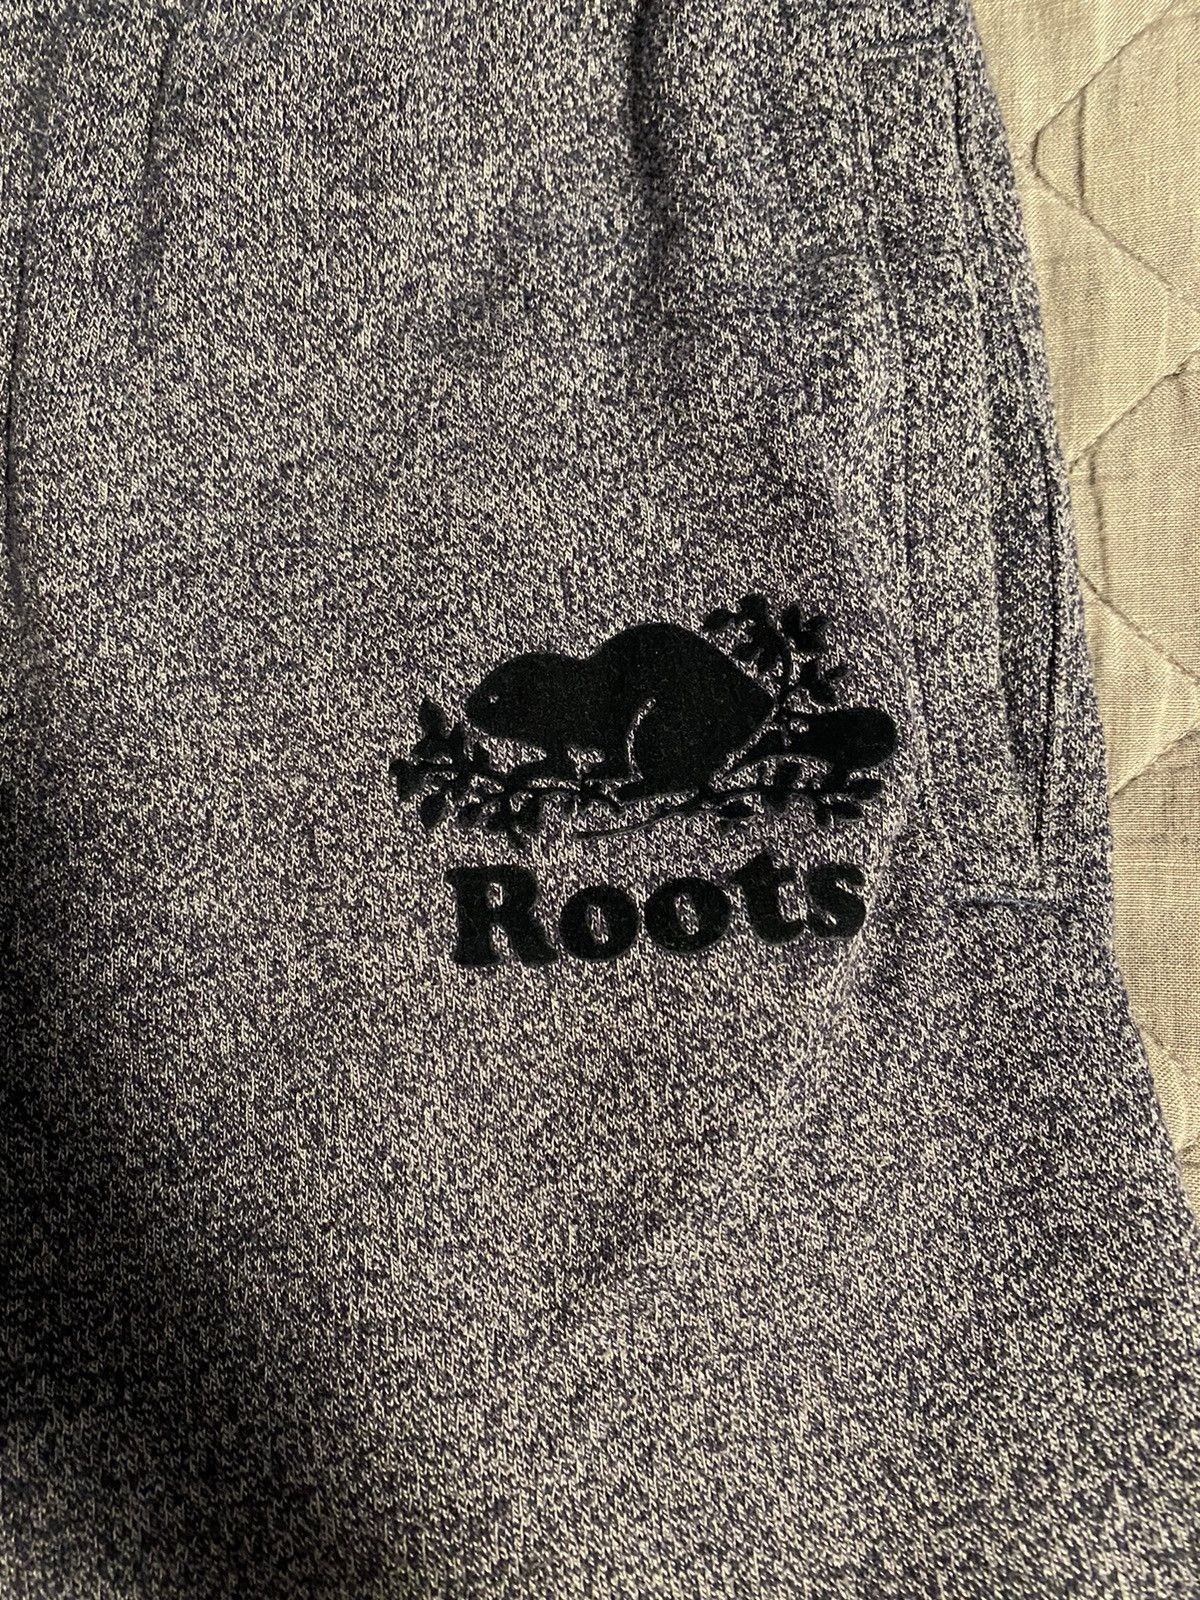 Roots Roots Sweatpants Navy Salt & Pepper Size US 30 / EU 46 - 2 Preview